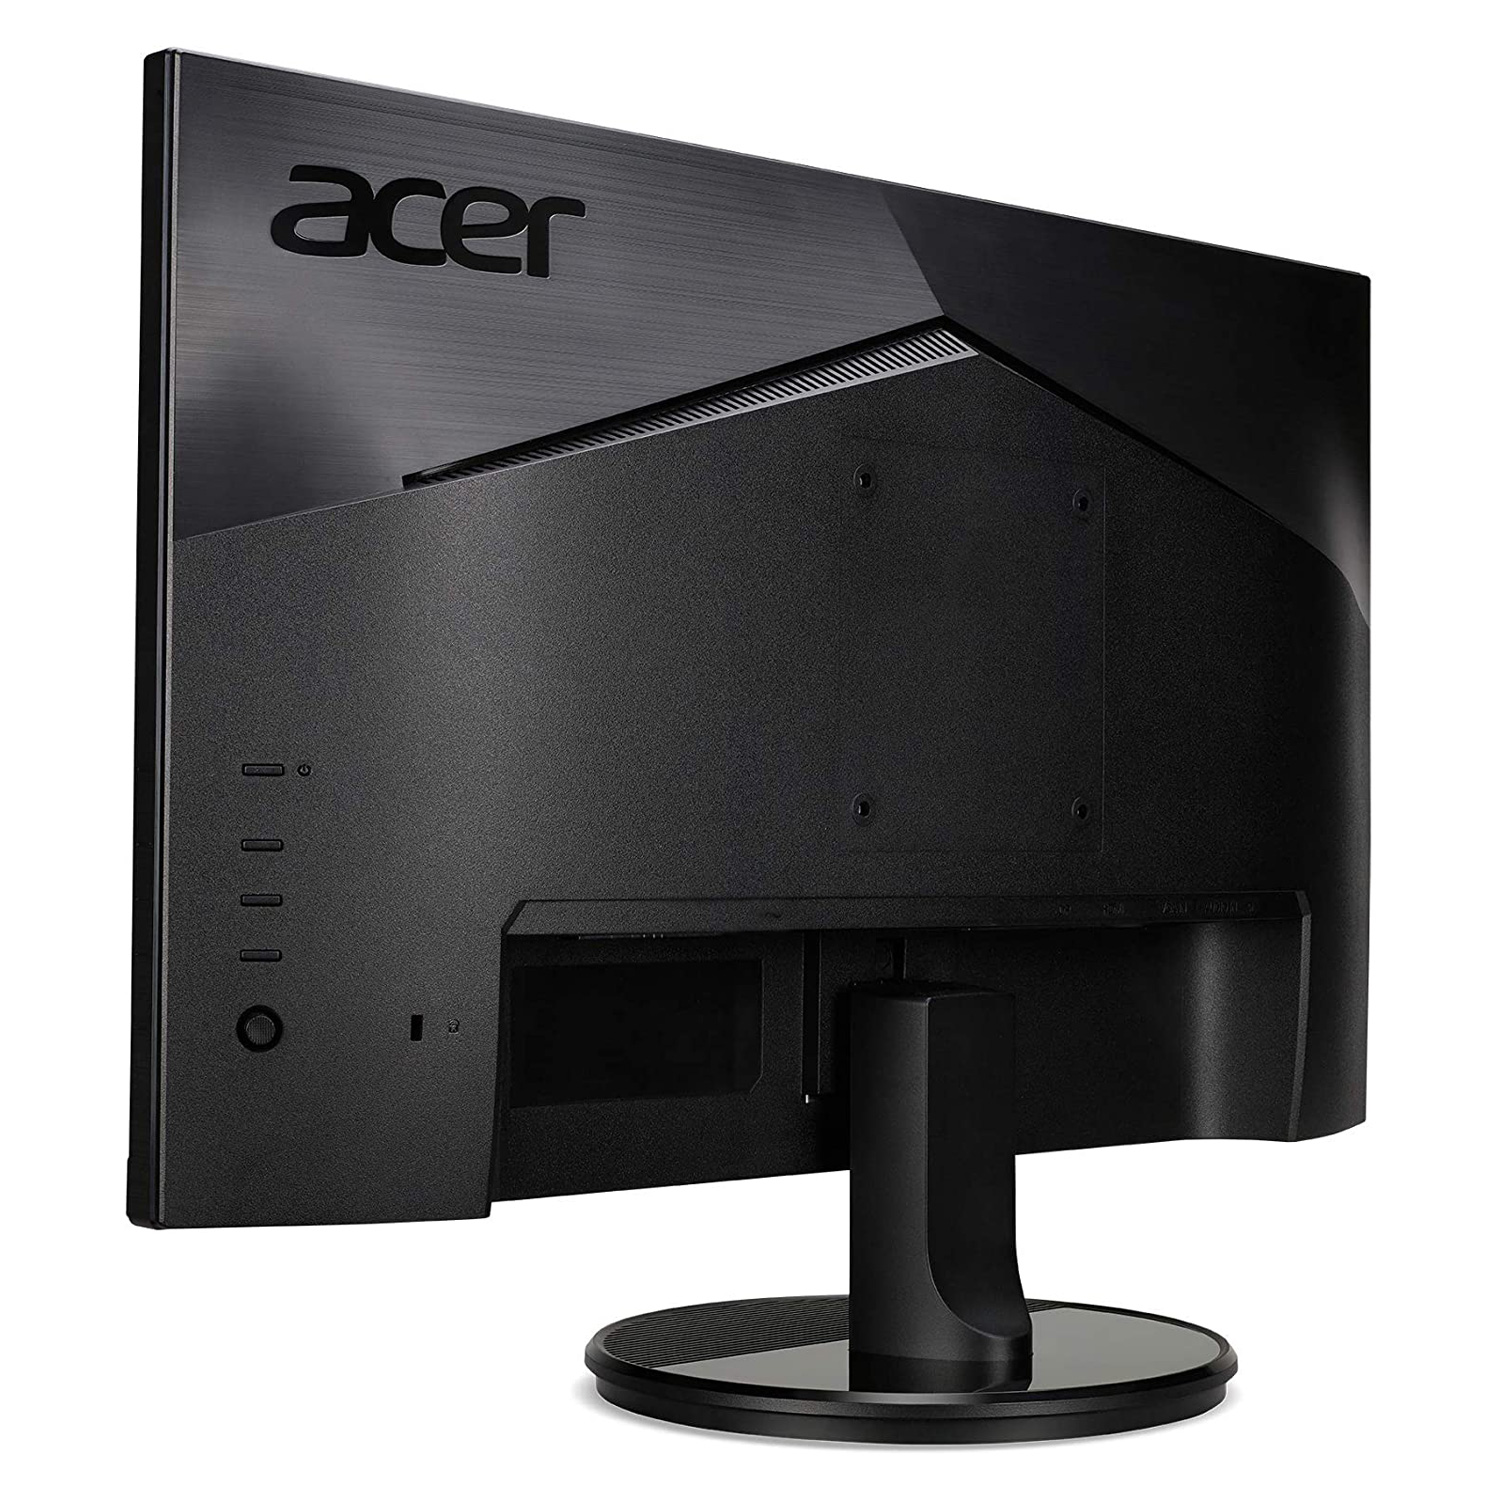 Monitor Acer K2 1080P 60HZ / Tela 23.8" / HDMI / VGA (K242HYL)